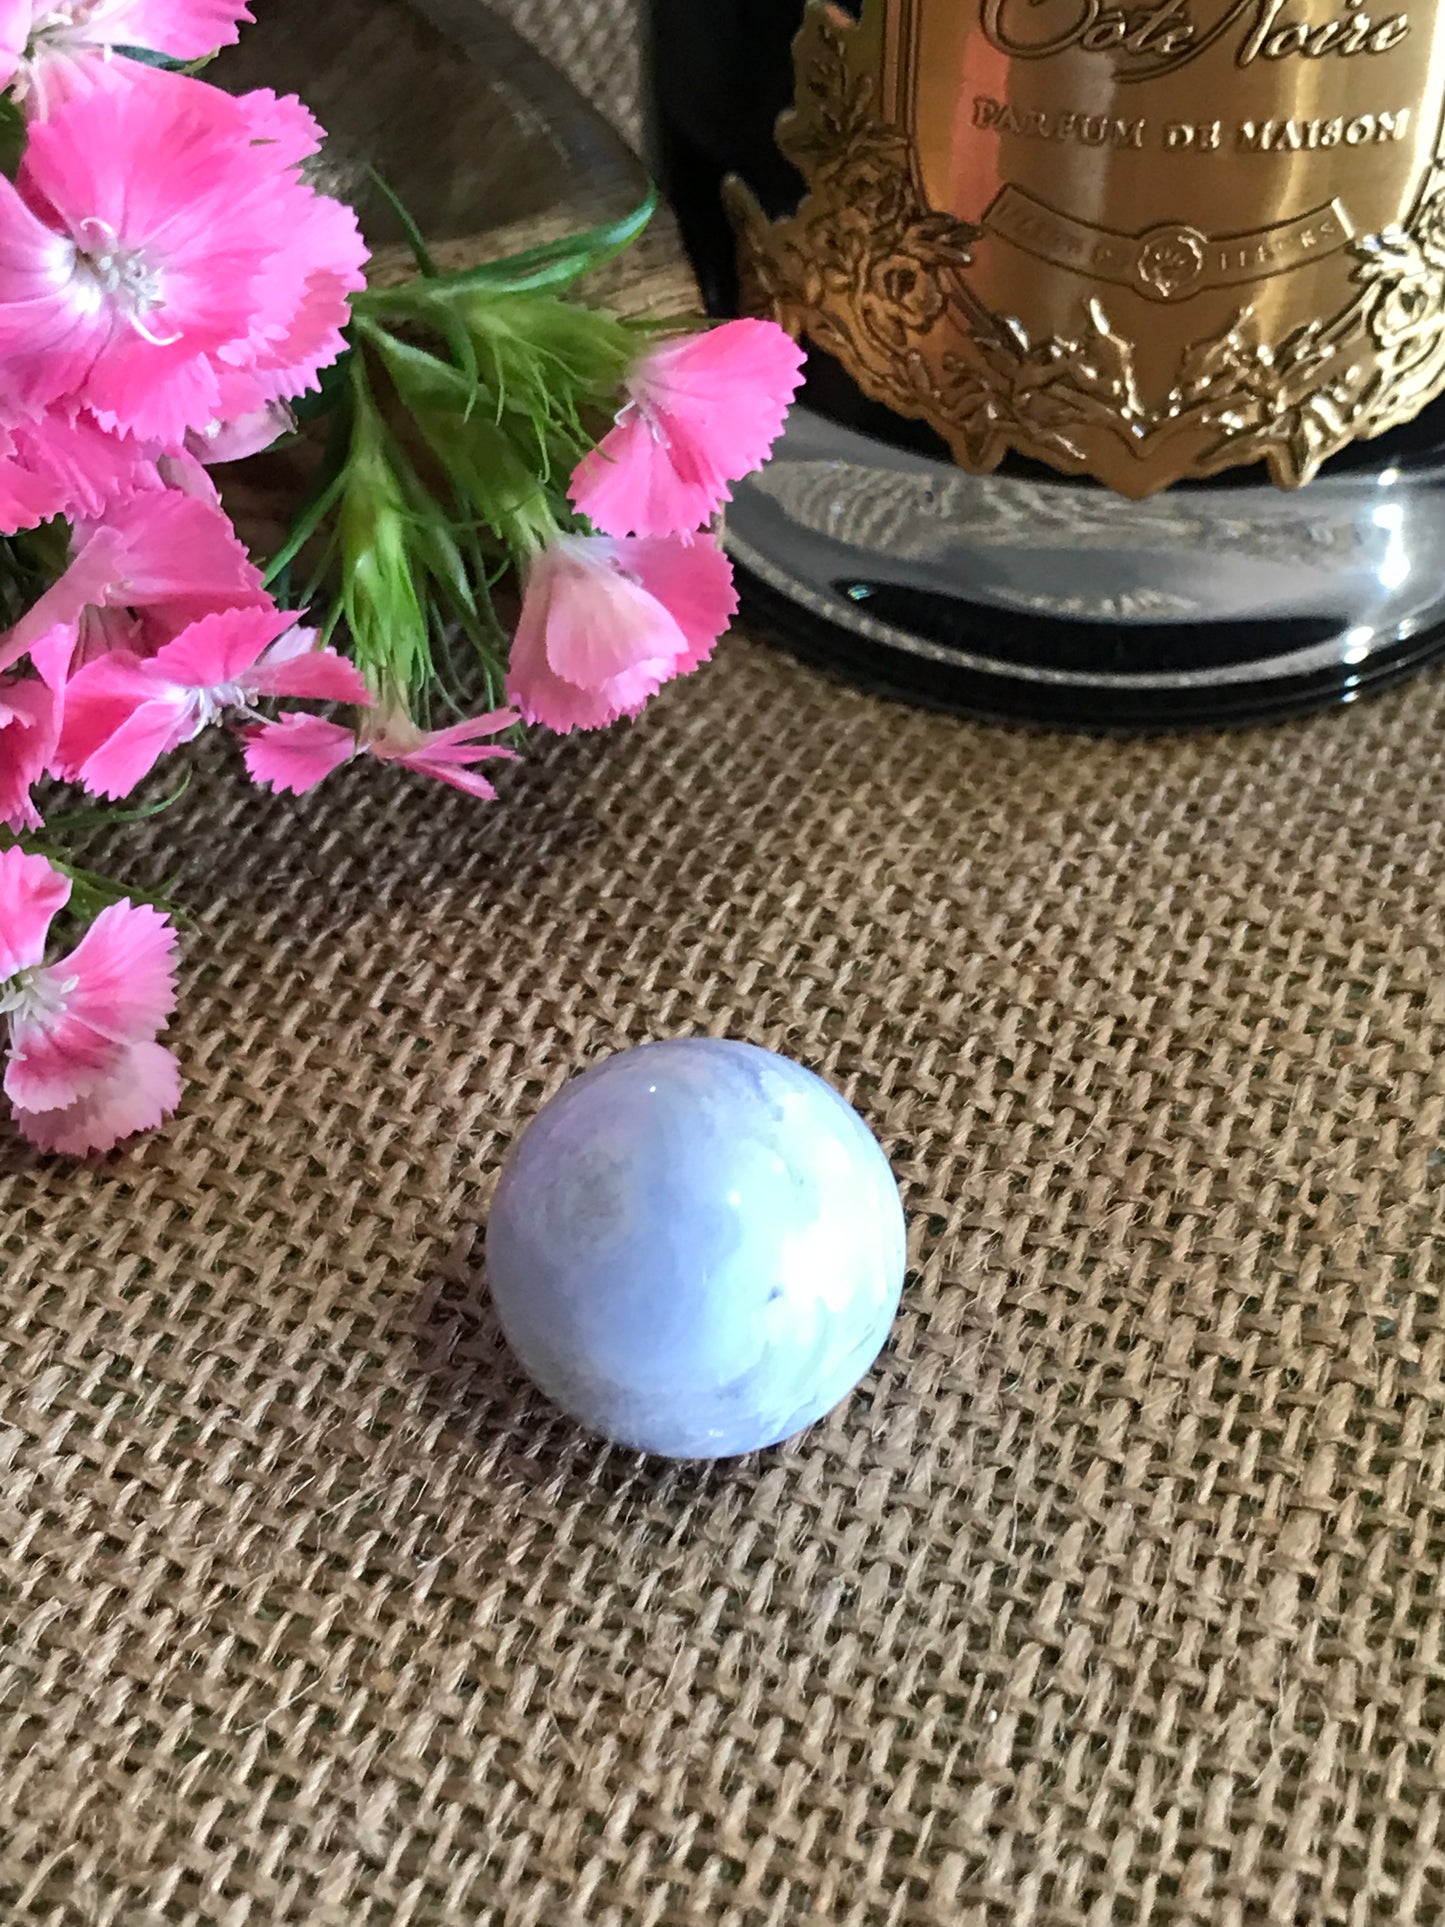 Blue Lace Agate Sphere